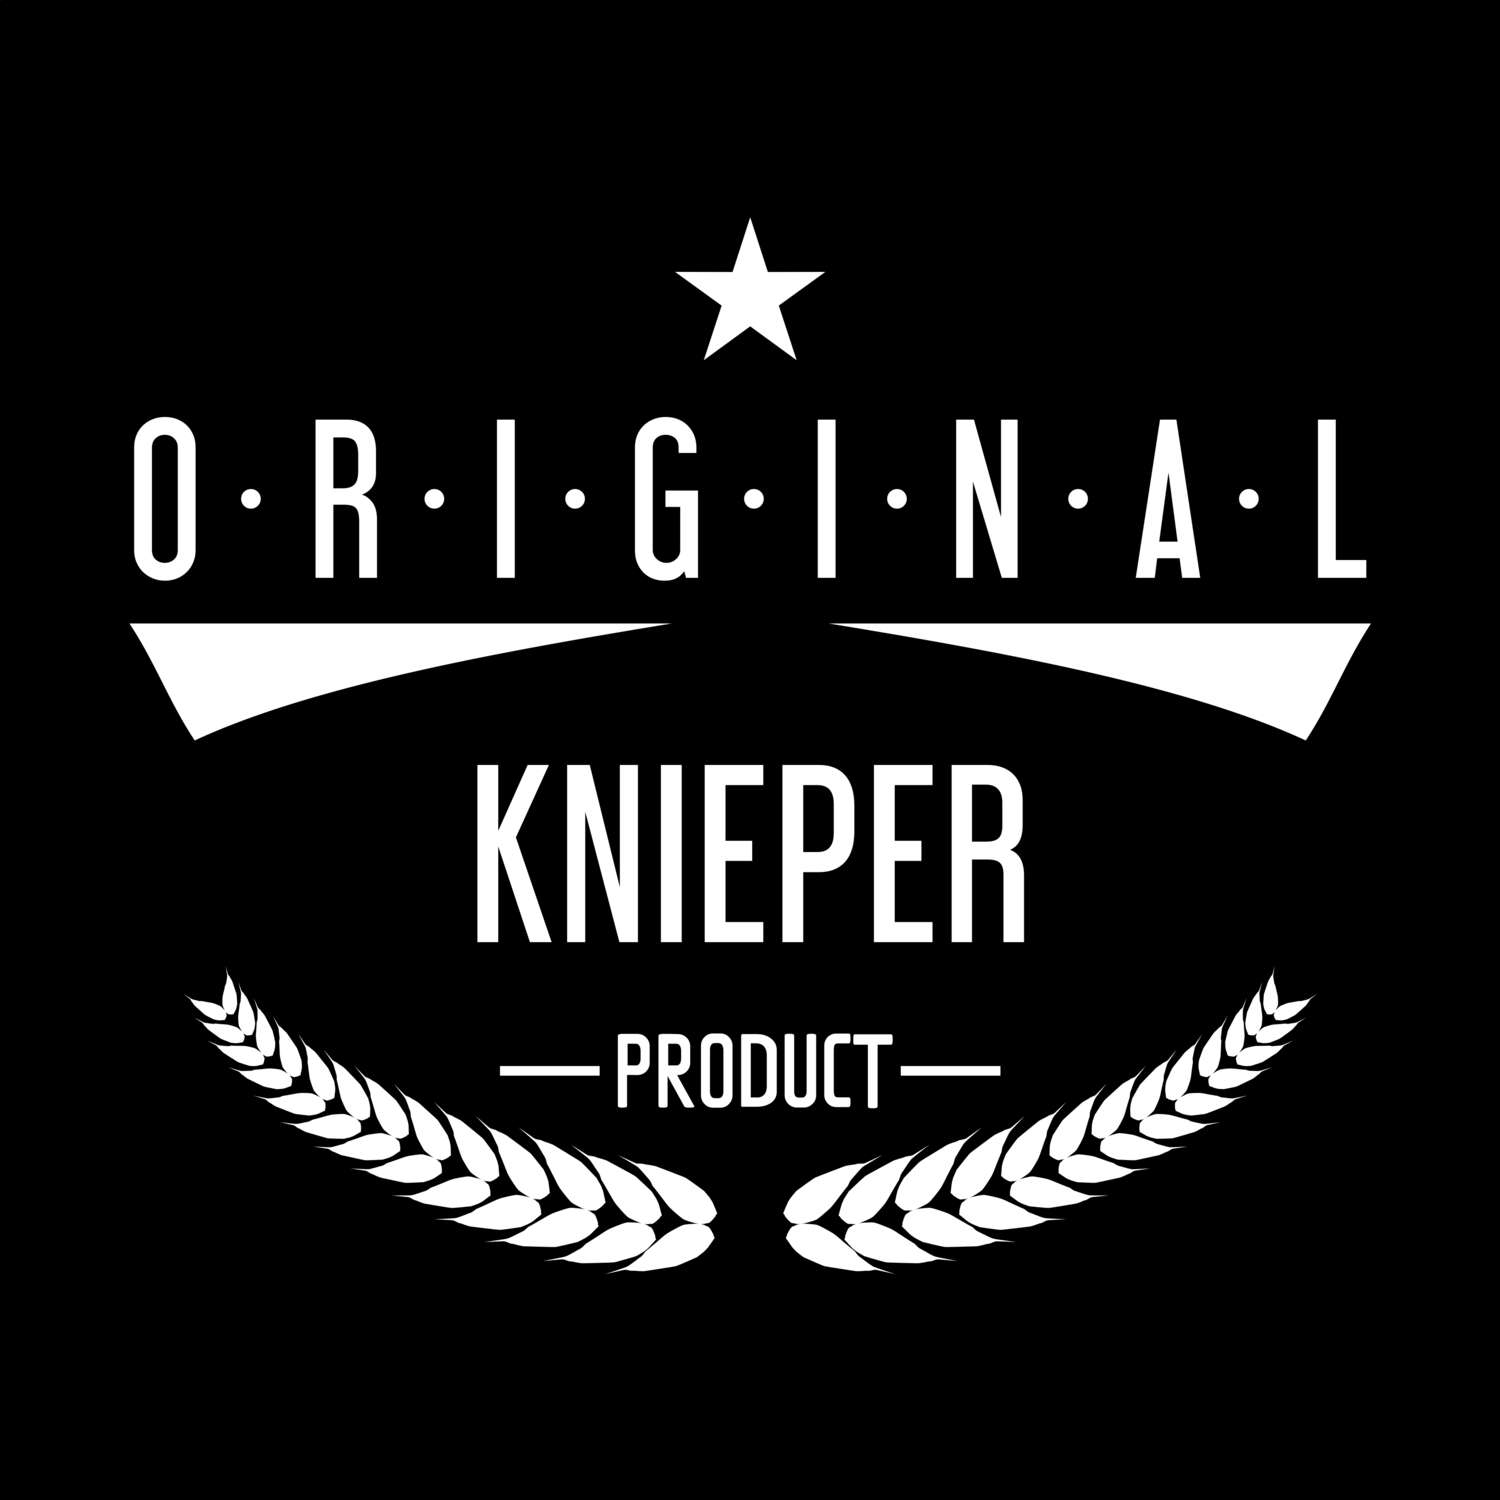 Knieper T-Shirt »Original Product«